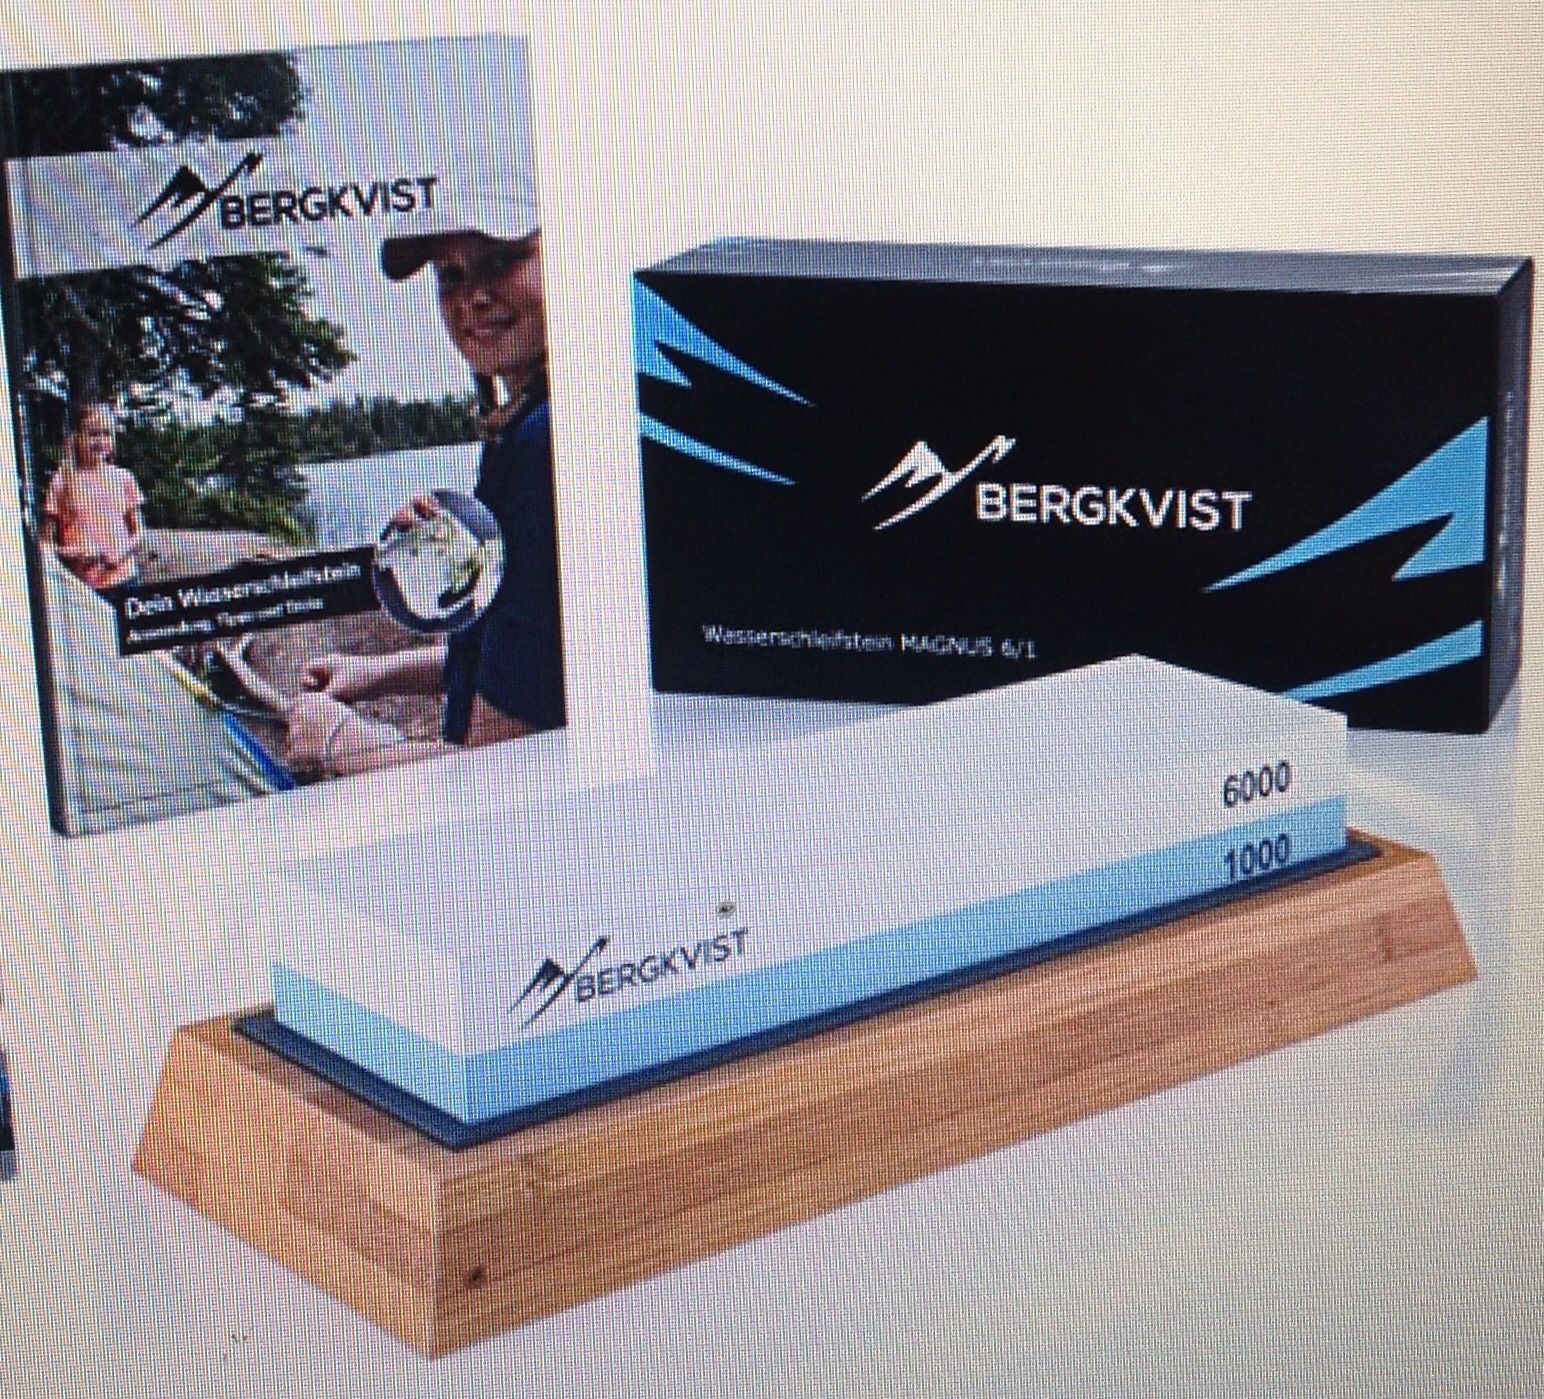 Bergkvist knife water sharping stone 1000 6000 asking 25.00 new in box